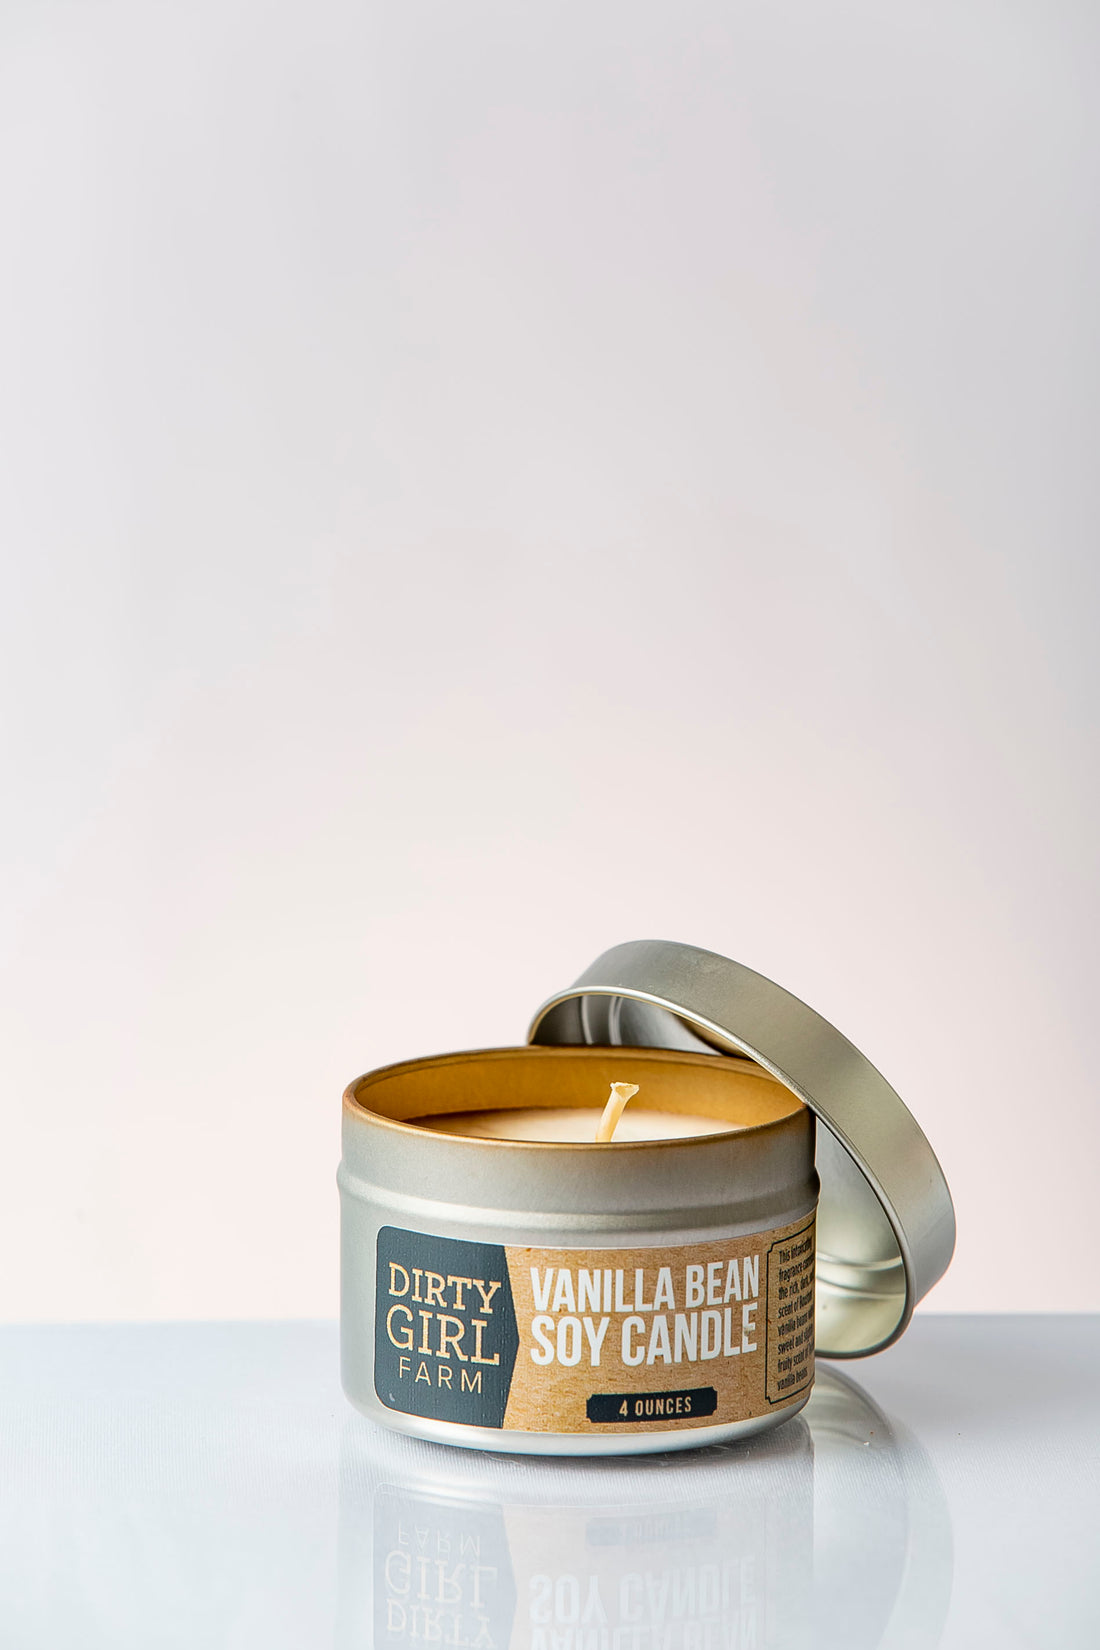 Dirty Girl Farm Vanilla Bean Soy Candle